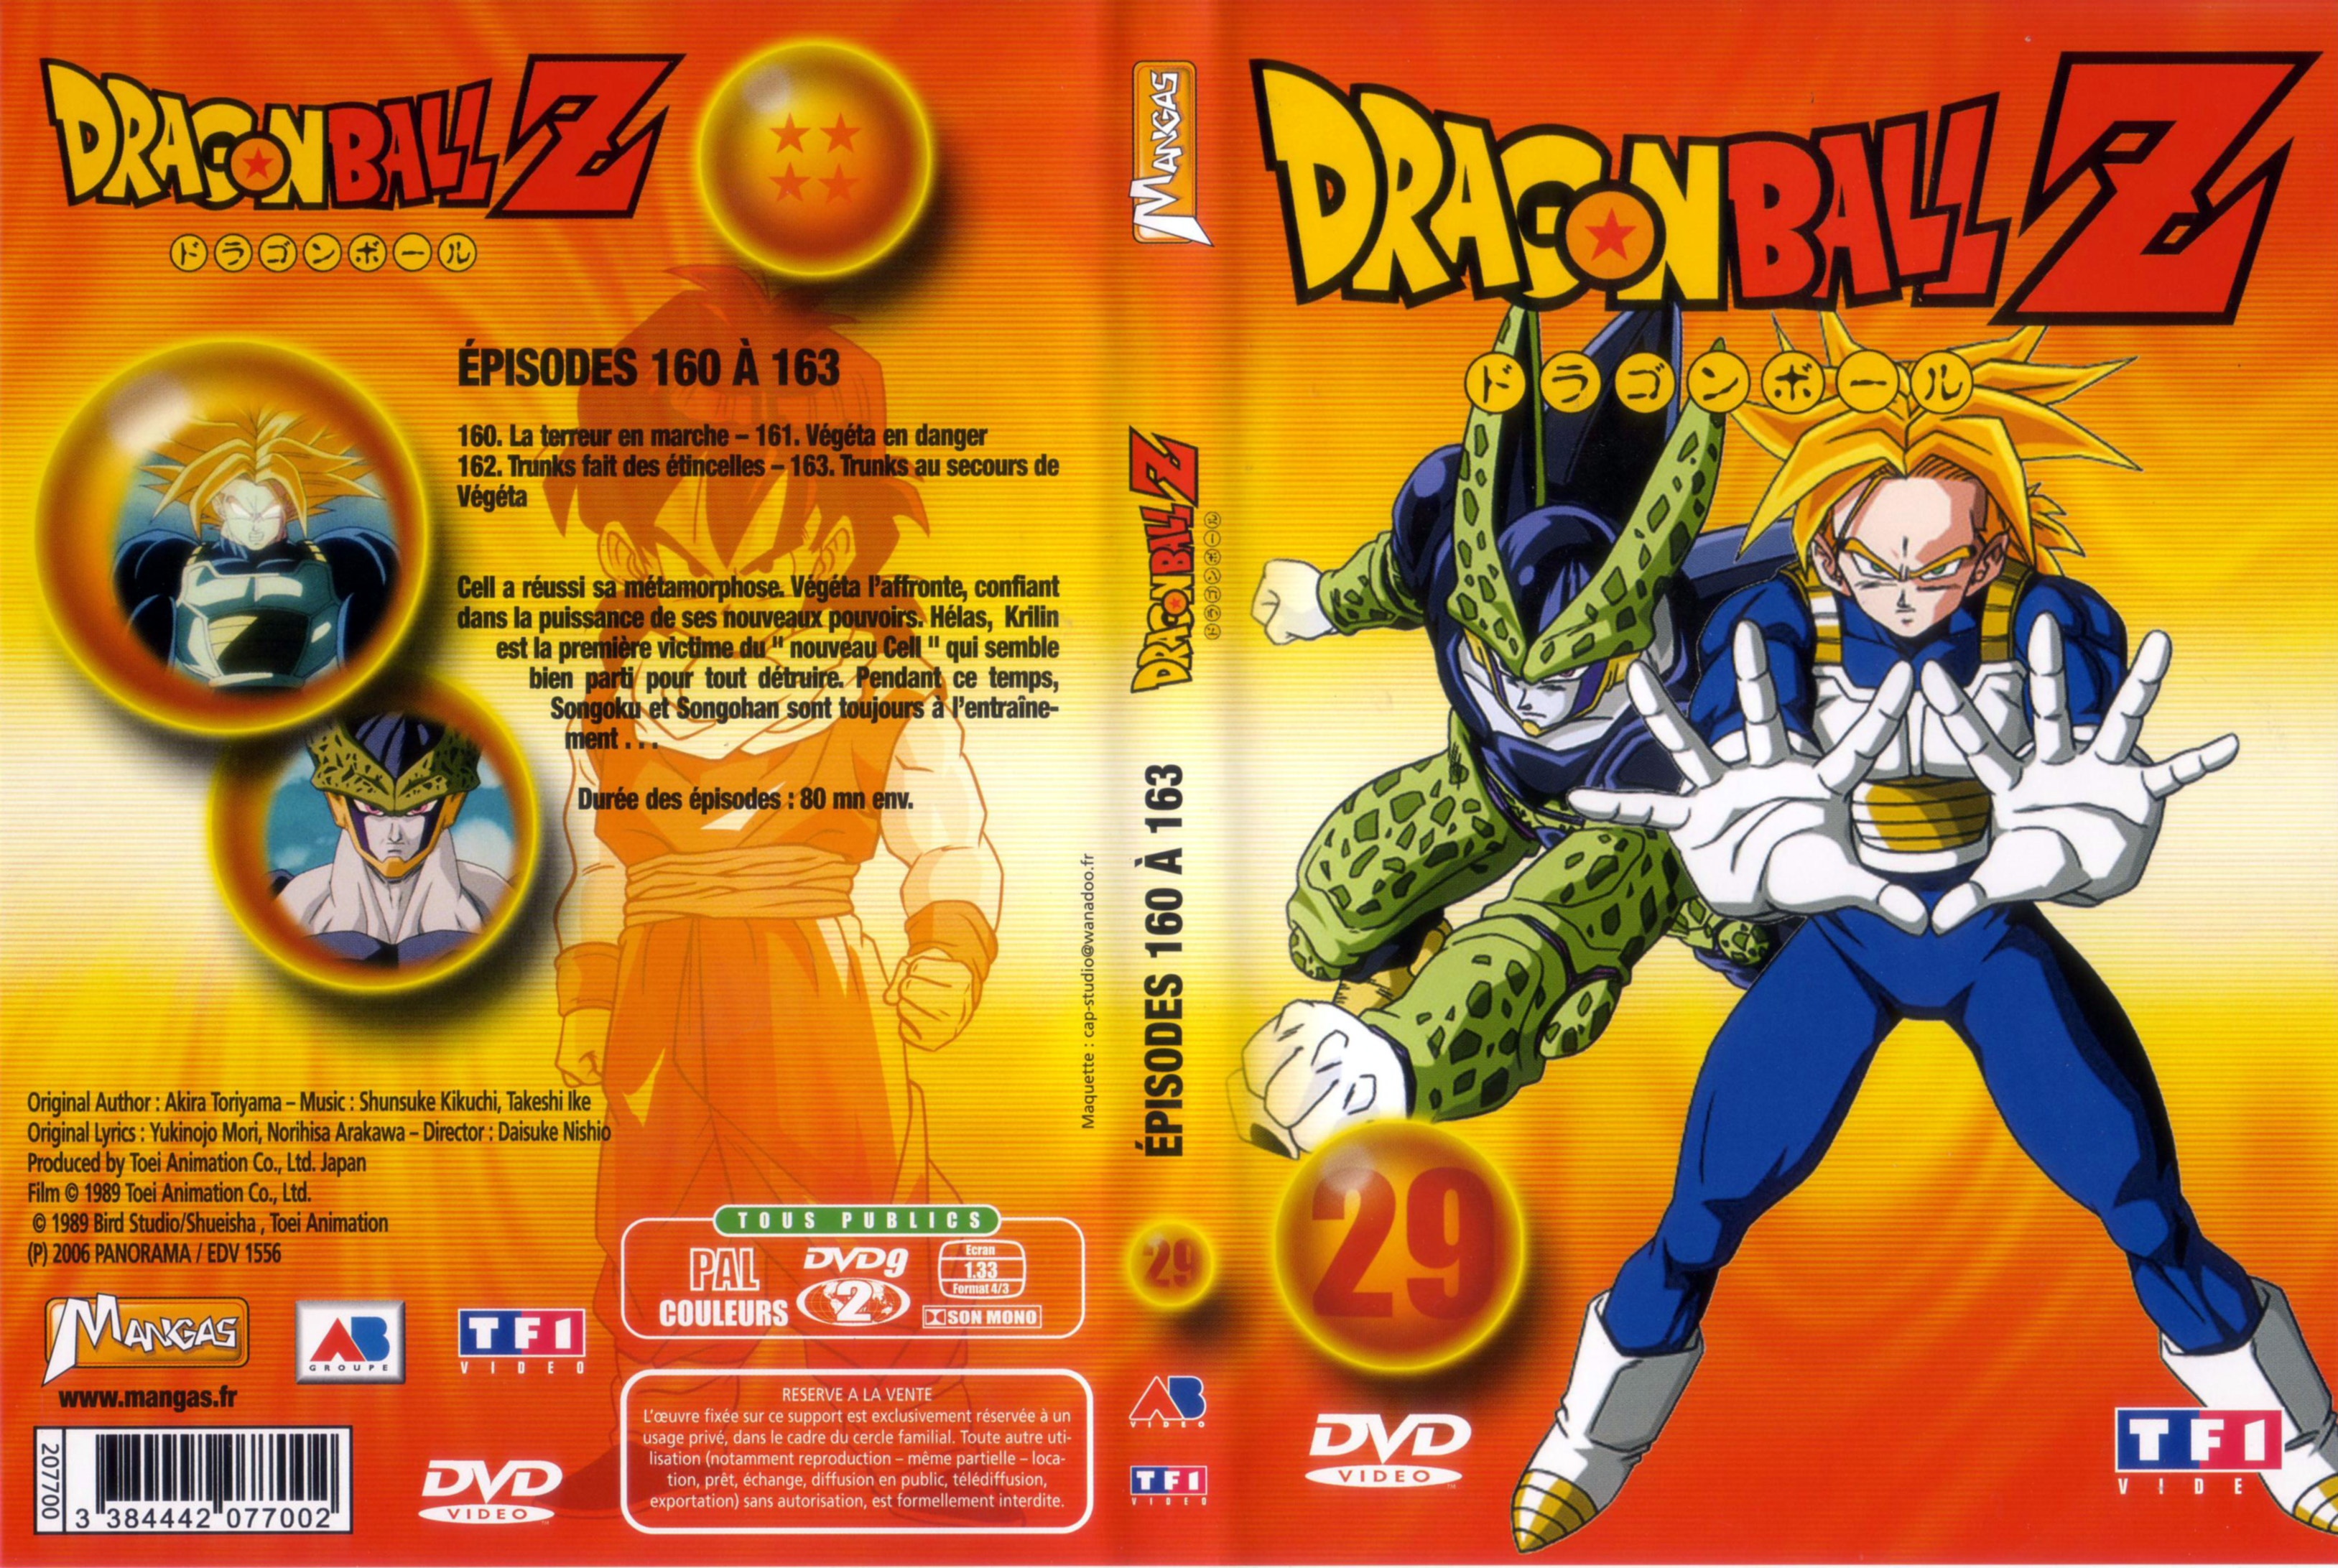 Jaquette DVD Dragon ball Z vol 29